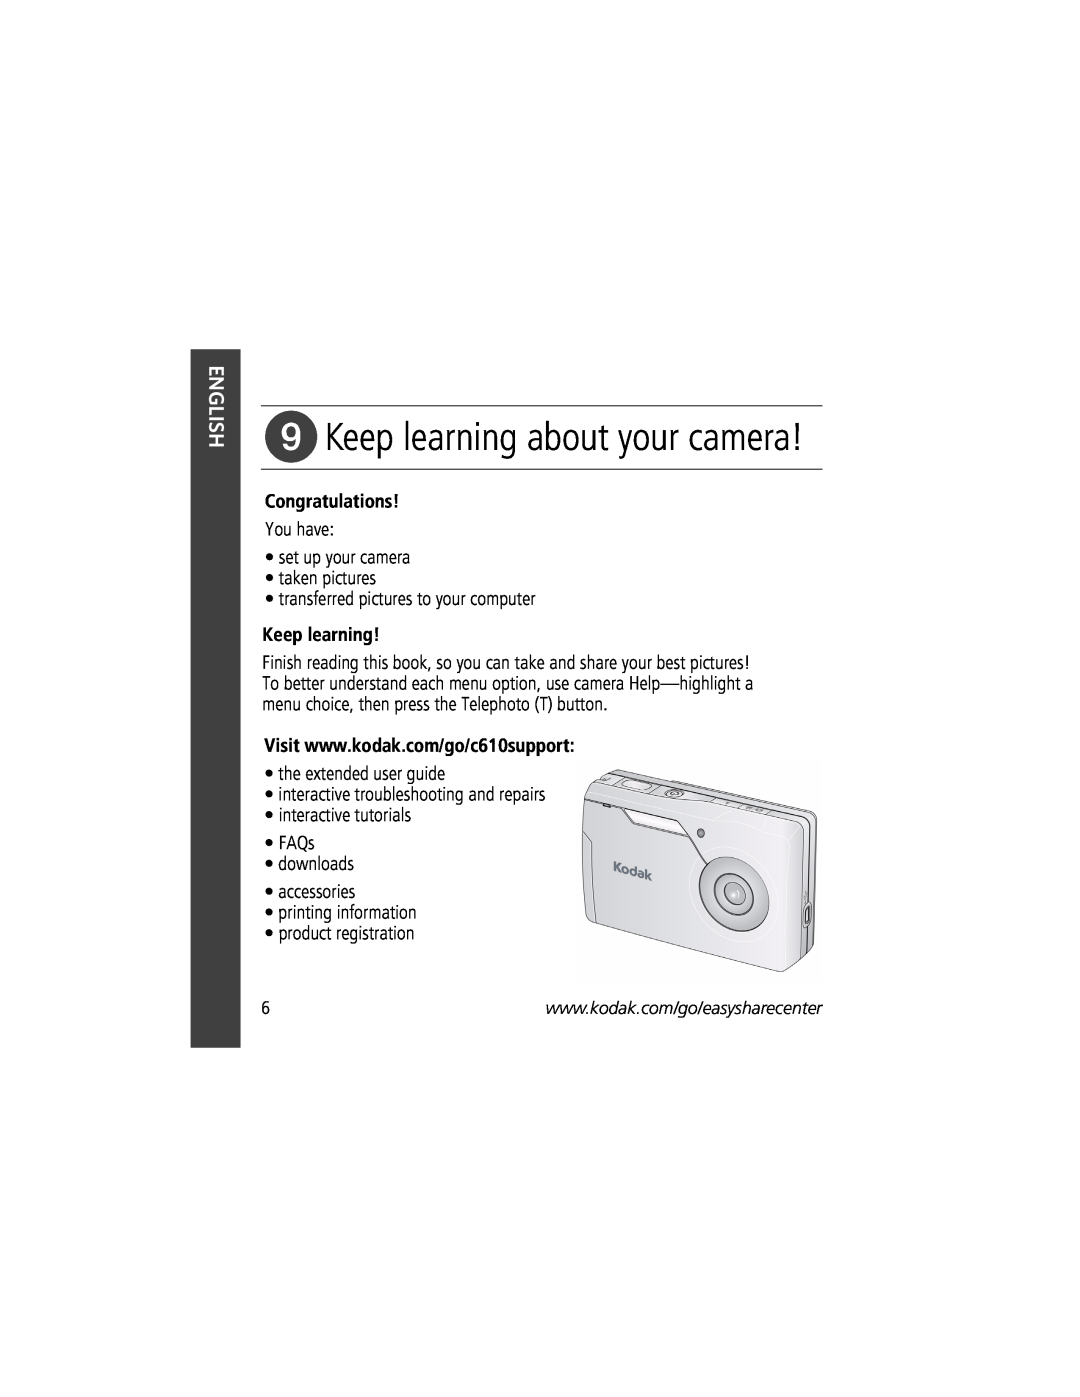 Kodak C610 manual Keep learning about your camera, English, Congratulations 